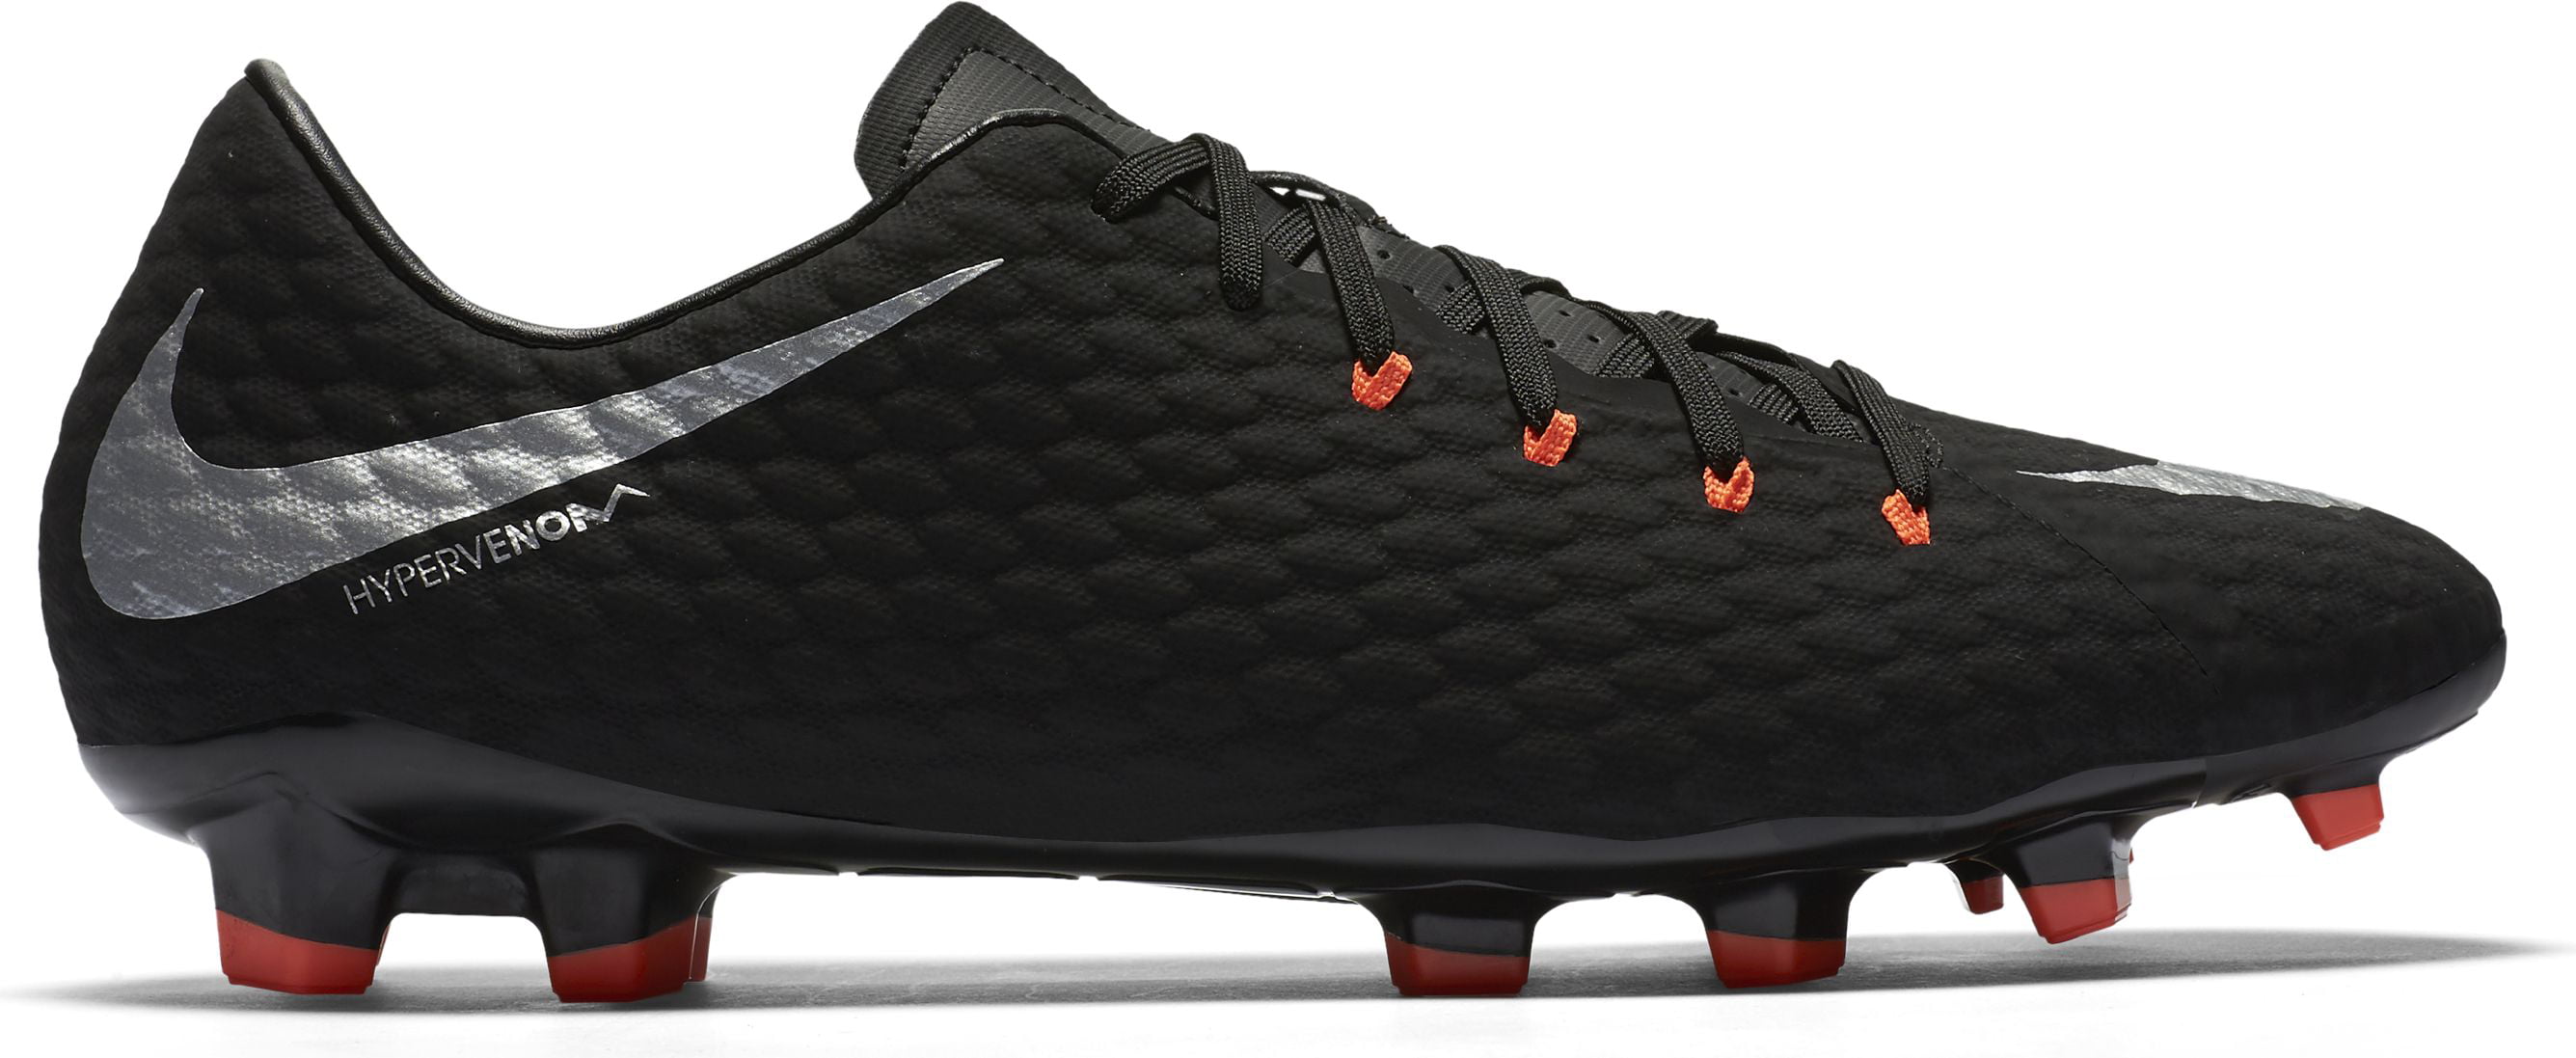 Nike Men's Hypervenom Phelon III FG Soccer Cleats - Black/Silver - 10.0 -